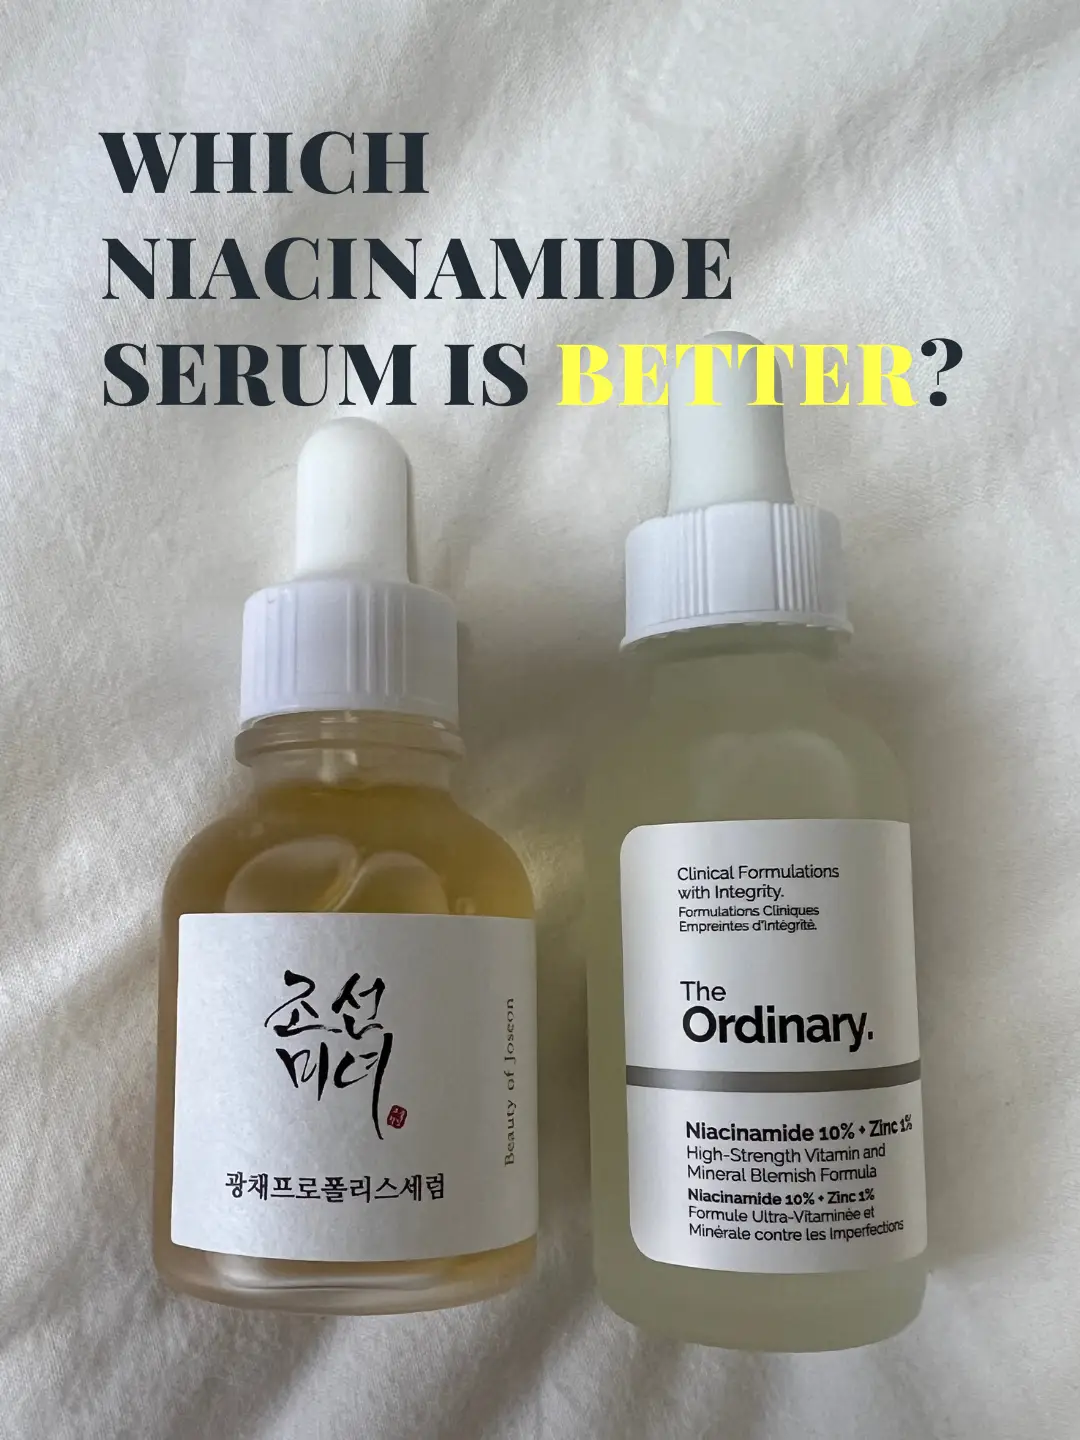 boj or the ordinary nincinamide serum? 🧐's images(0)